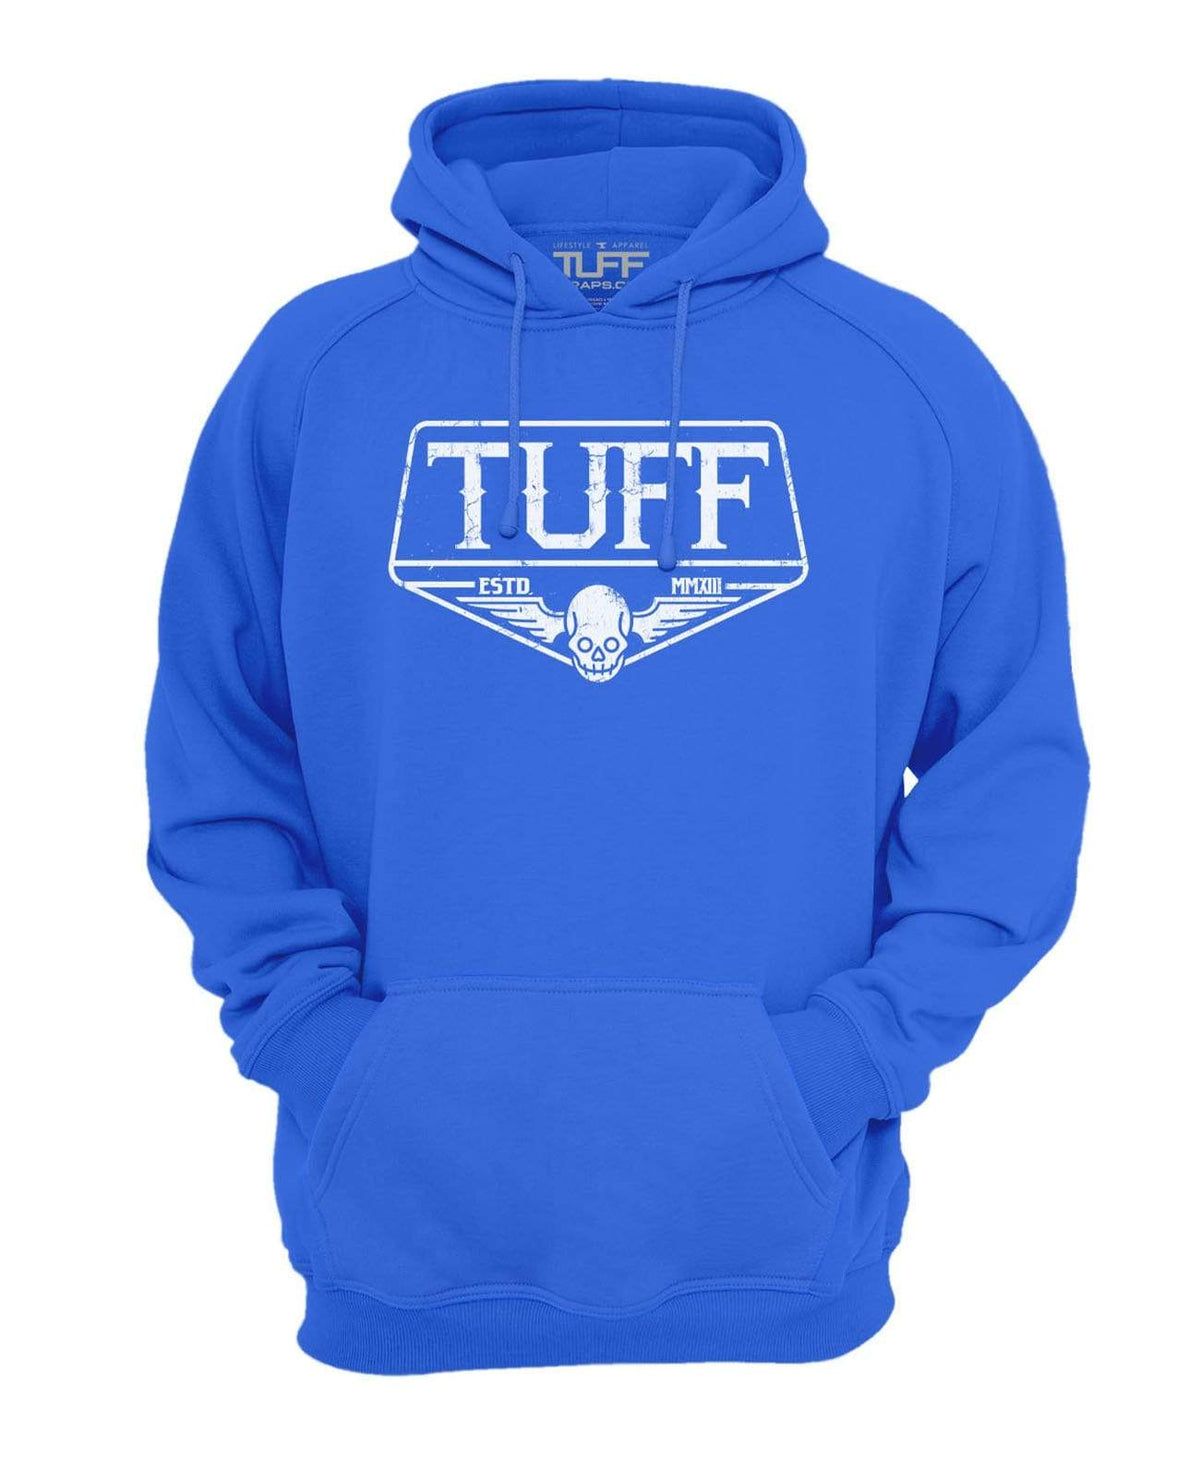 TUFF Skull Wings Hooded Sweatshirt XS / Royal Blue TuffWraps.com